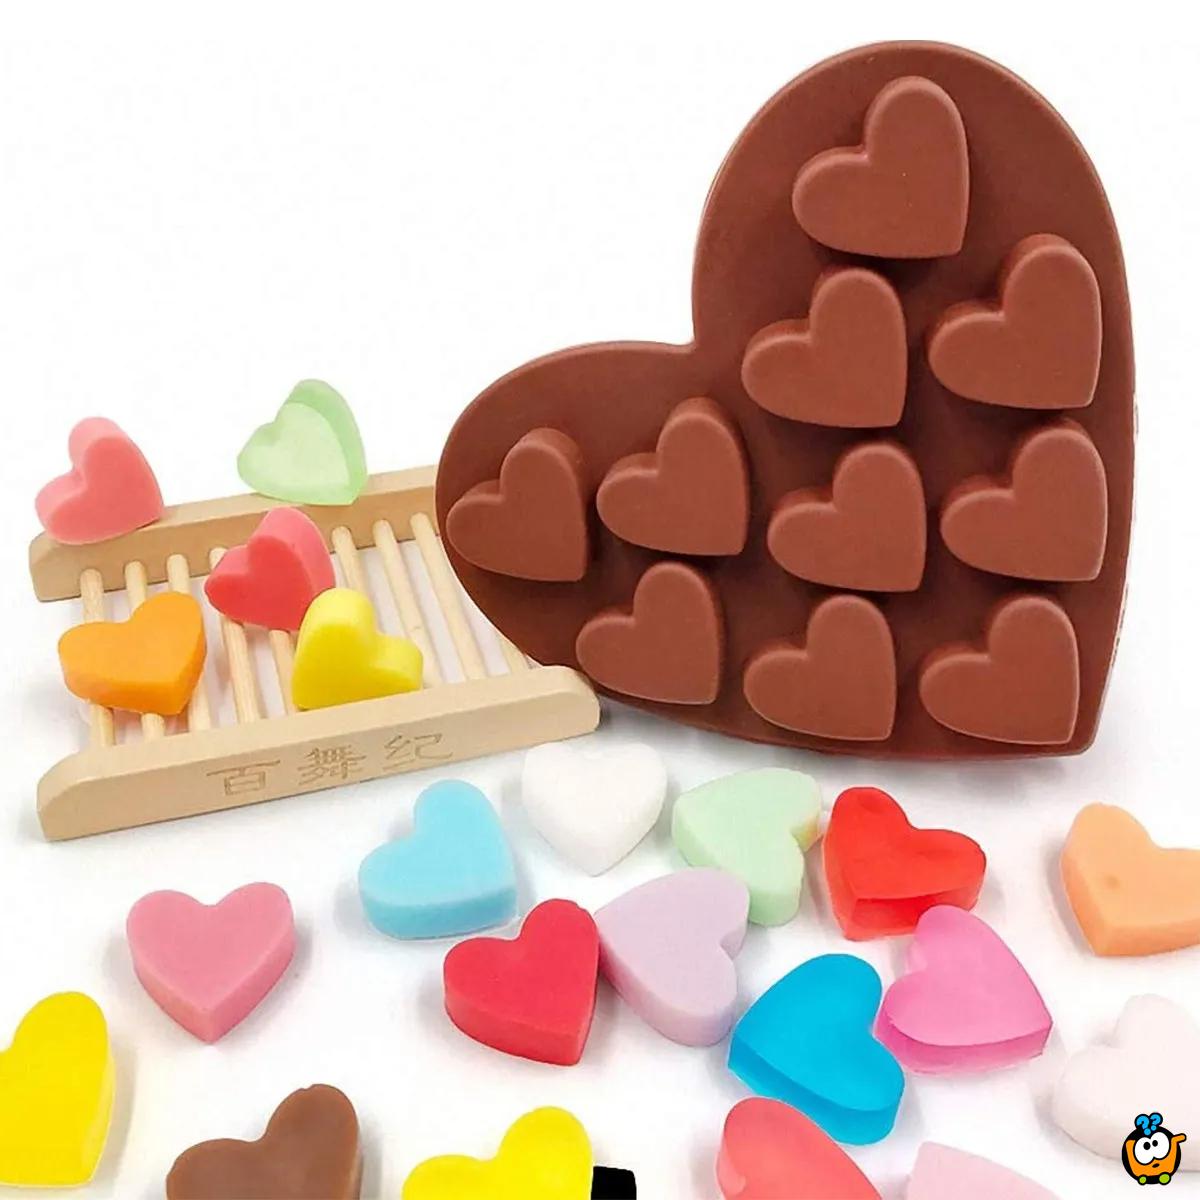 Kalup za čokoladice i sitne kolače u obliku srca